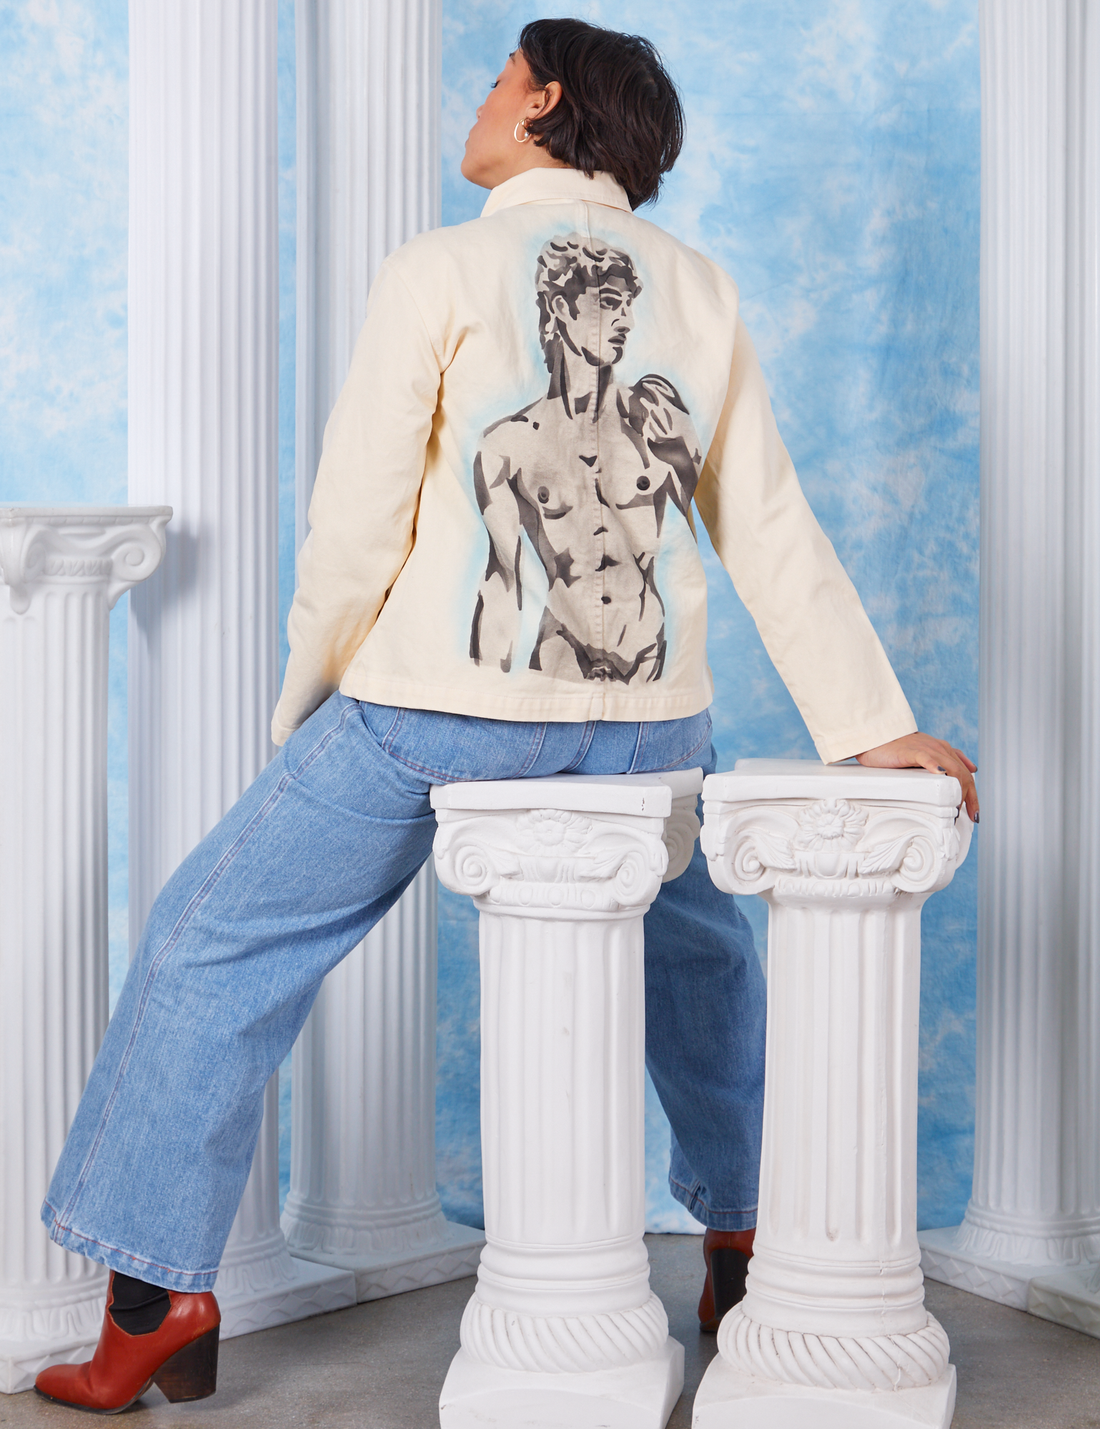 Tiara wearing XS Neoclassical Work Jacket featuring airbrushed David statue on back of jacket